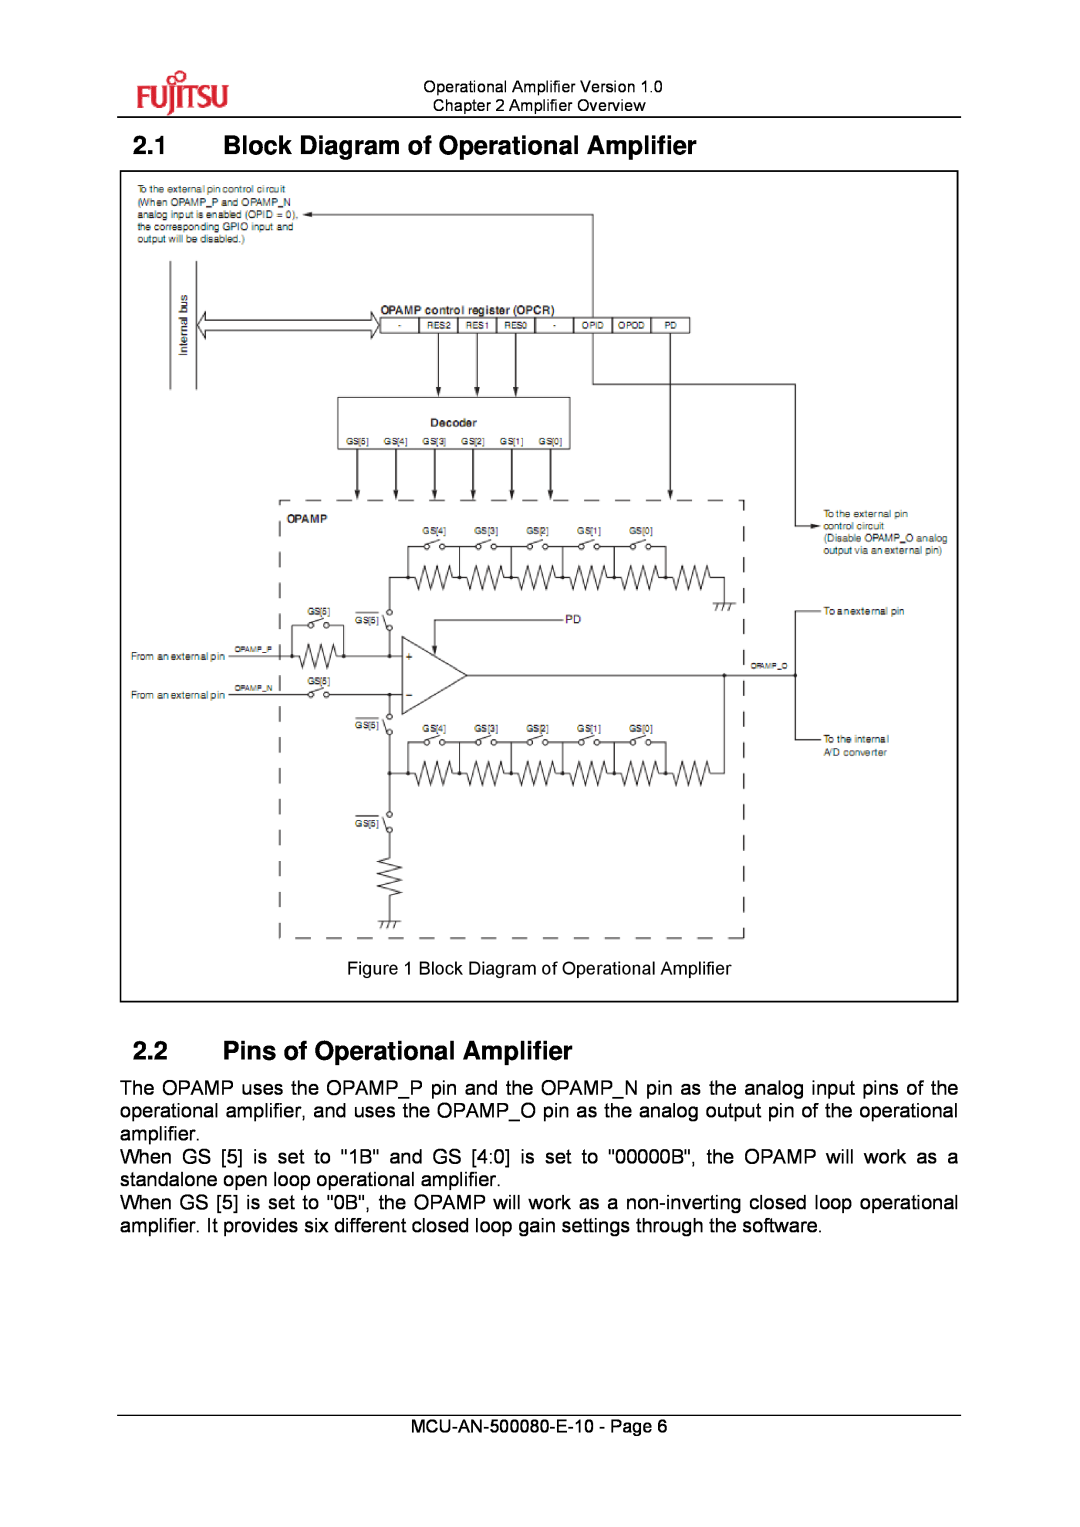 Fujitsu MB95F430 2.1Block Diagram of Operational Amplifier, 2.2Pins of Operational Amplifier, MCU-AN-500080-E-10- Page 